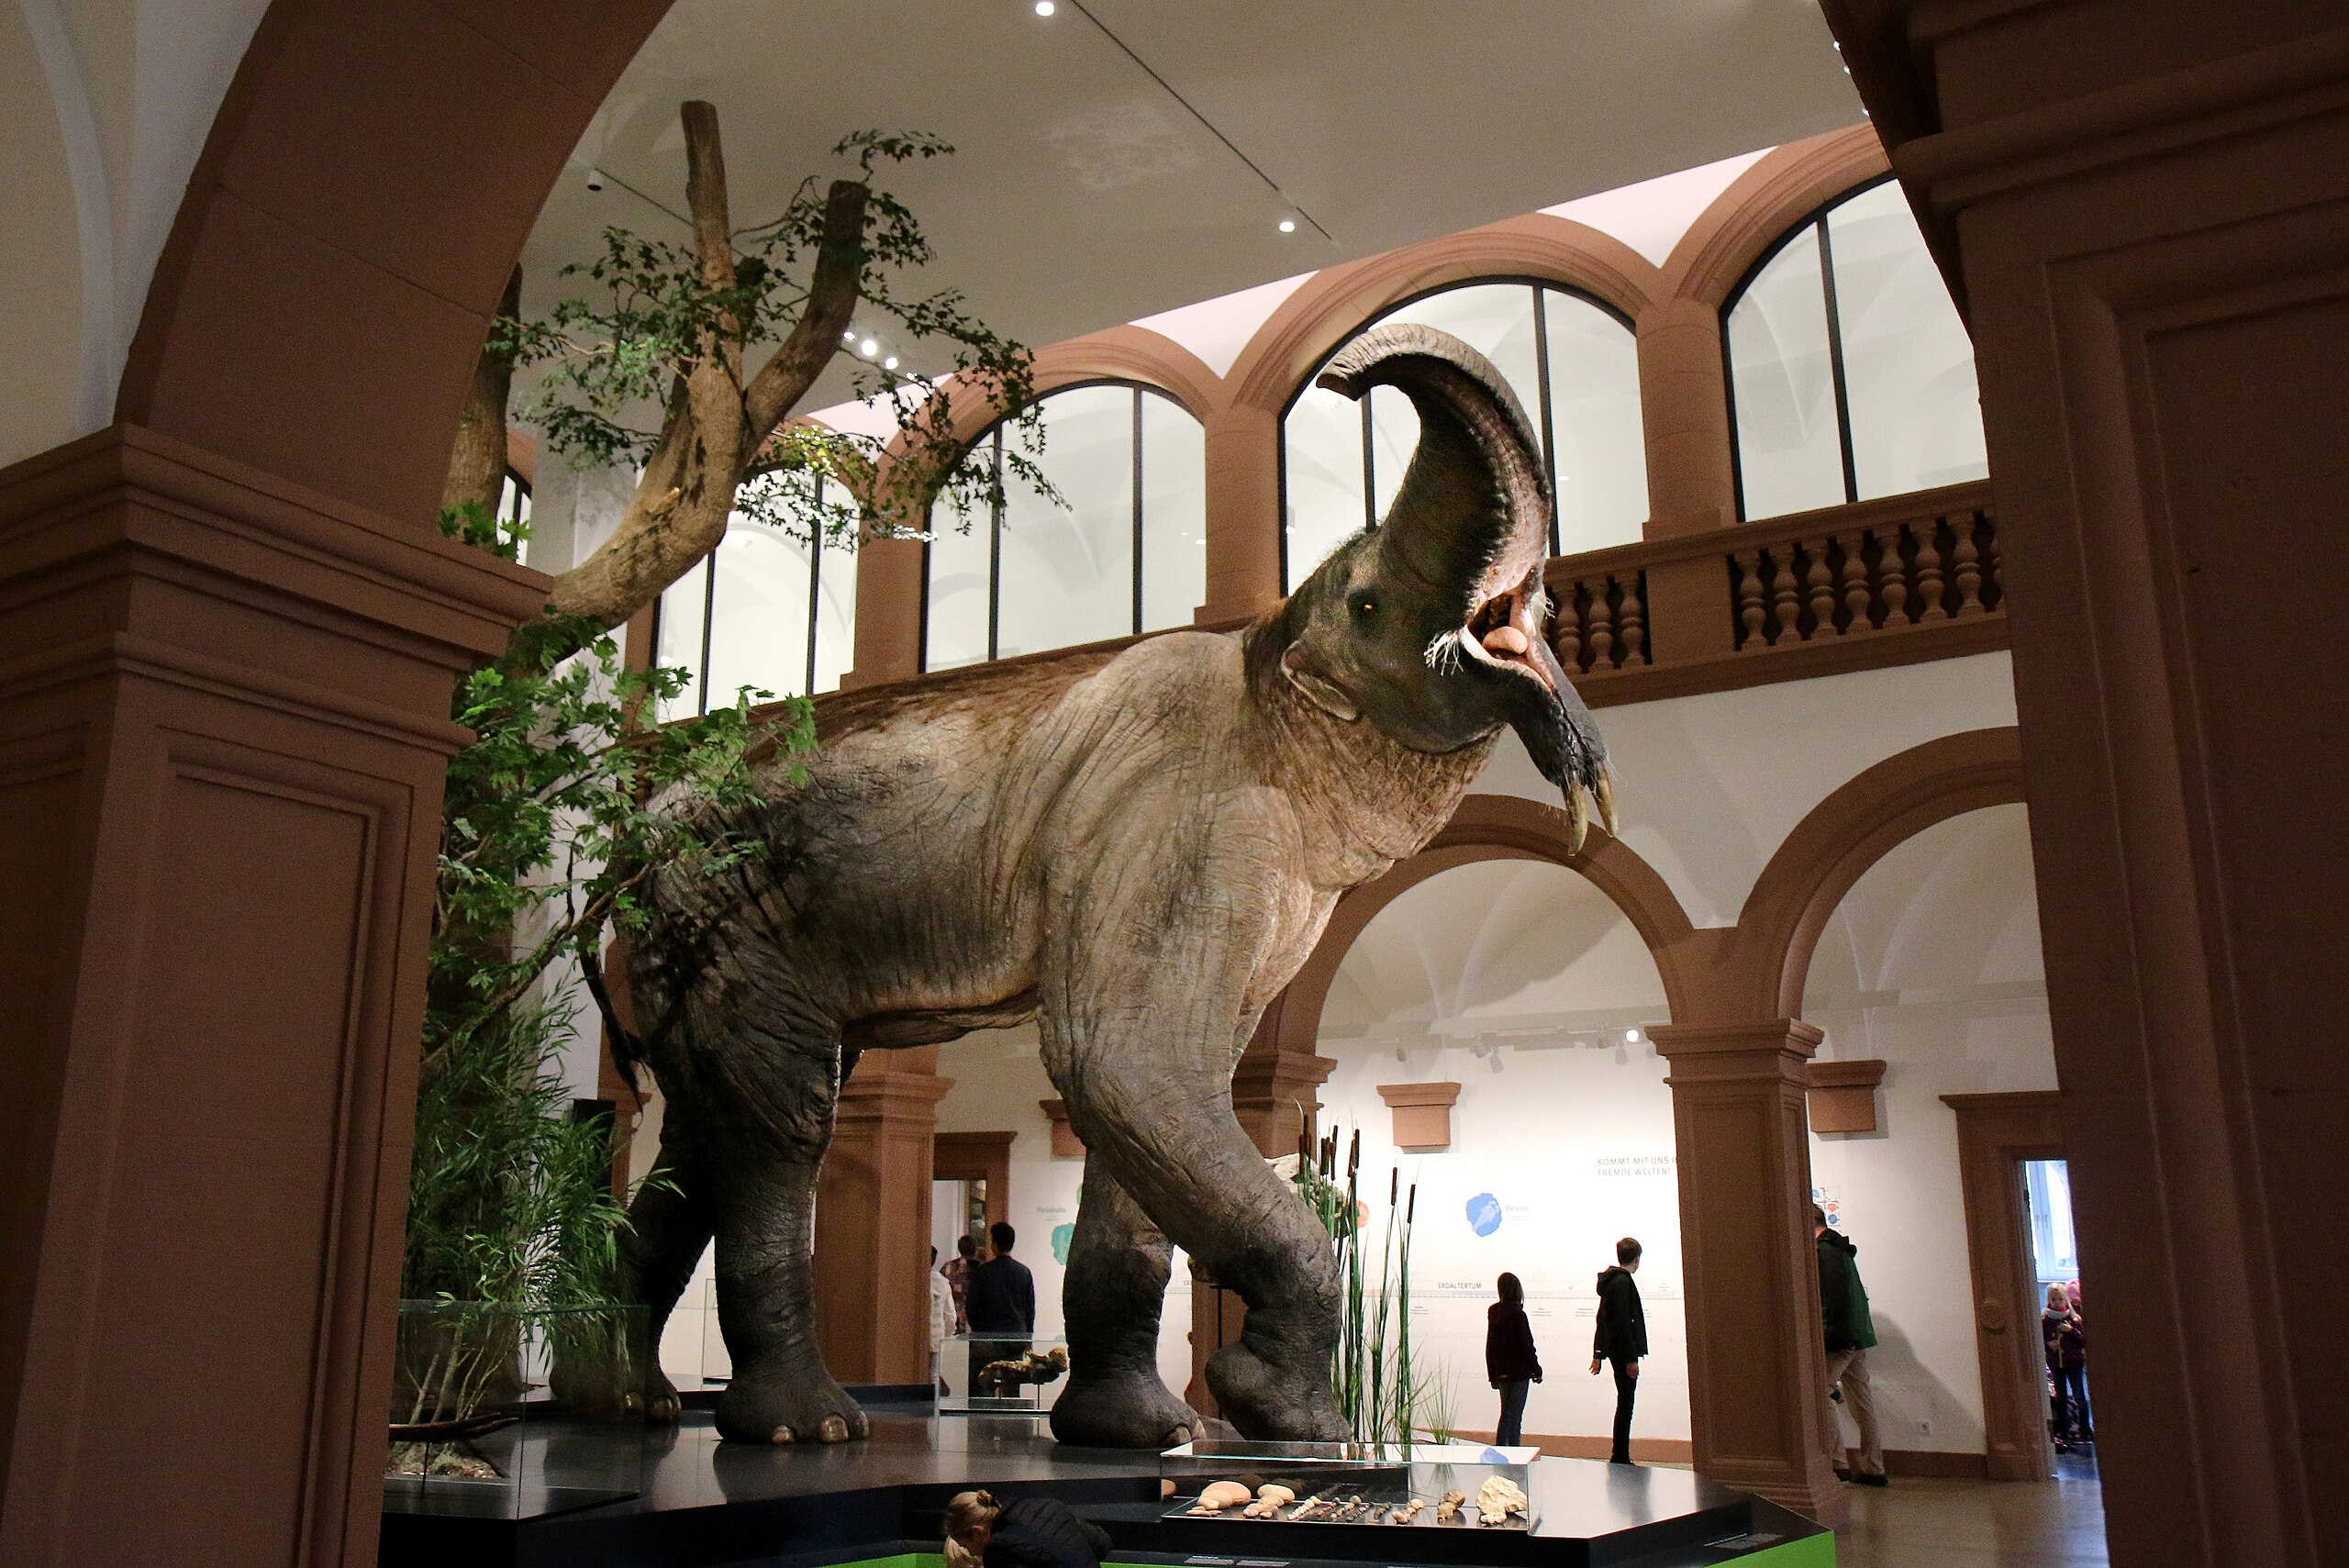 Deinotherium at Mainz Natural History Museum. : r/Naturewasmetal